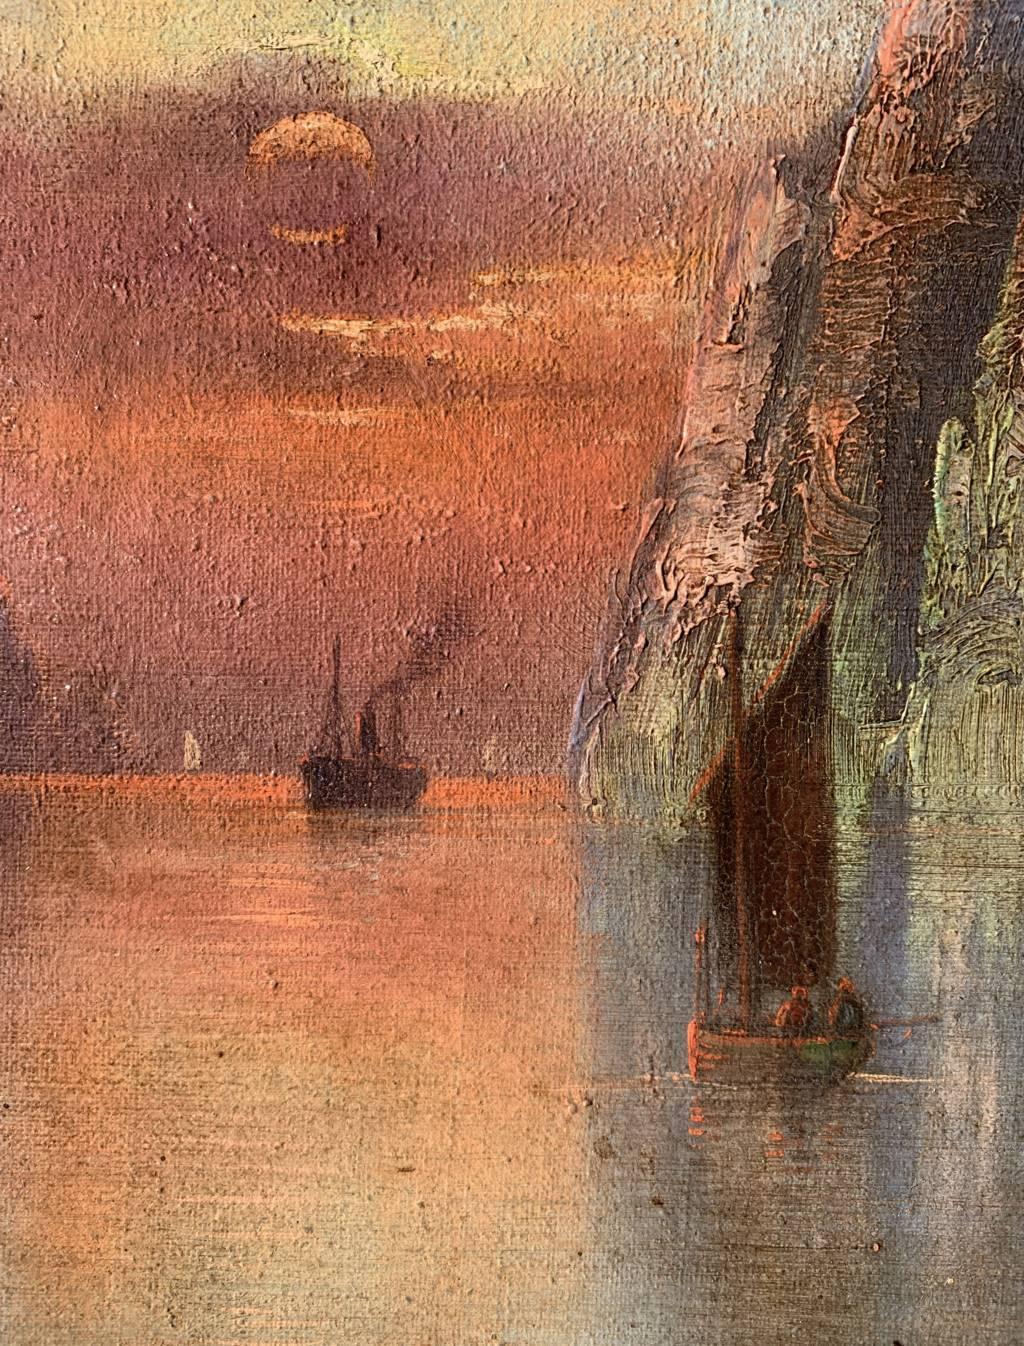 Nils Christiansen (Danish painter) - 19th century landscape painting - Sunset 4